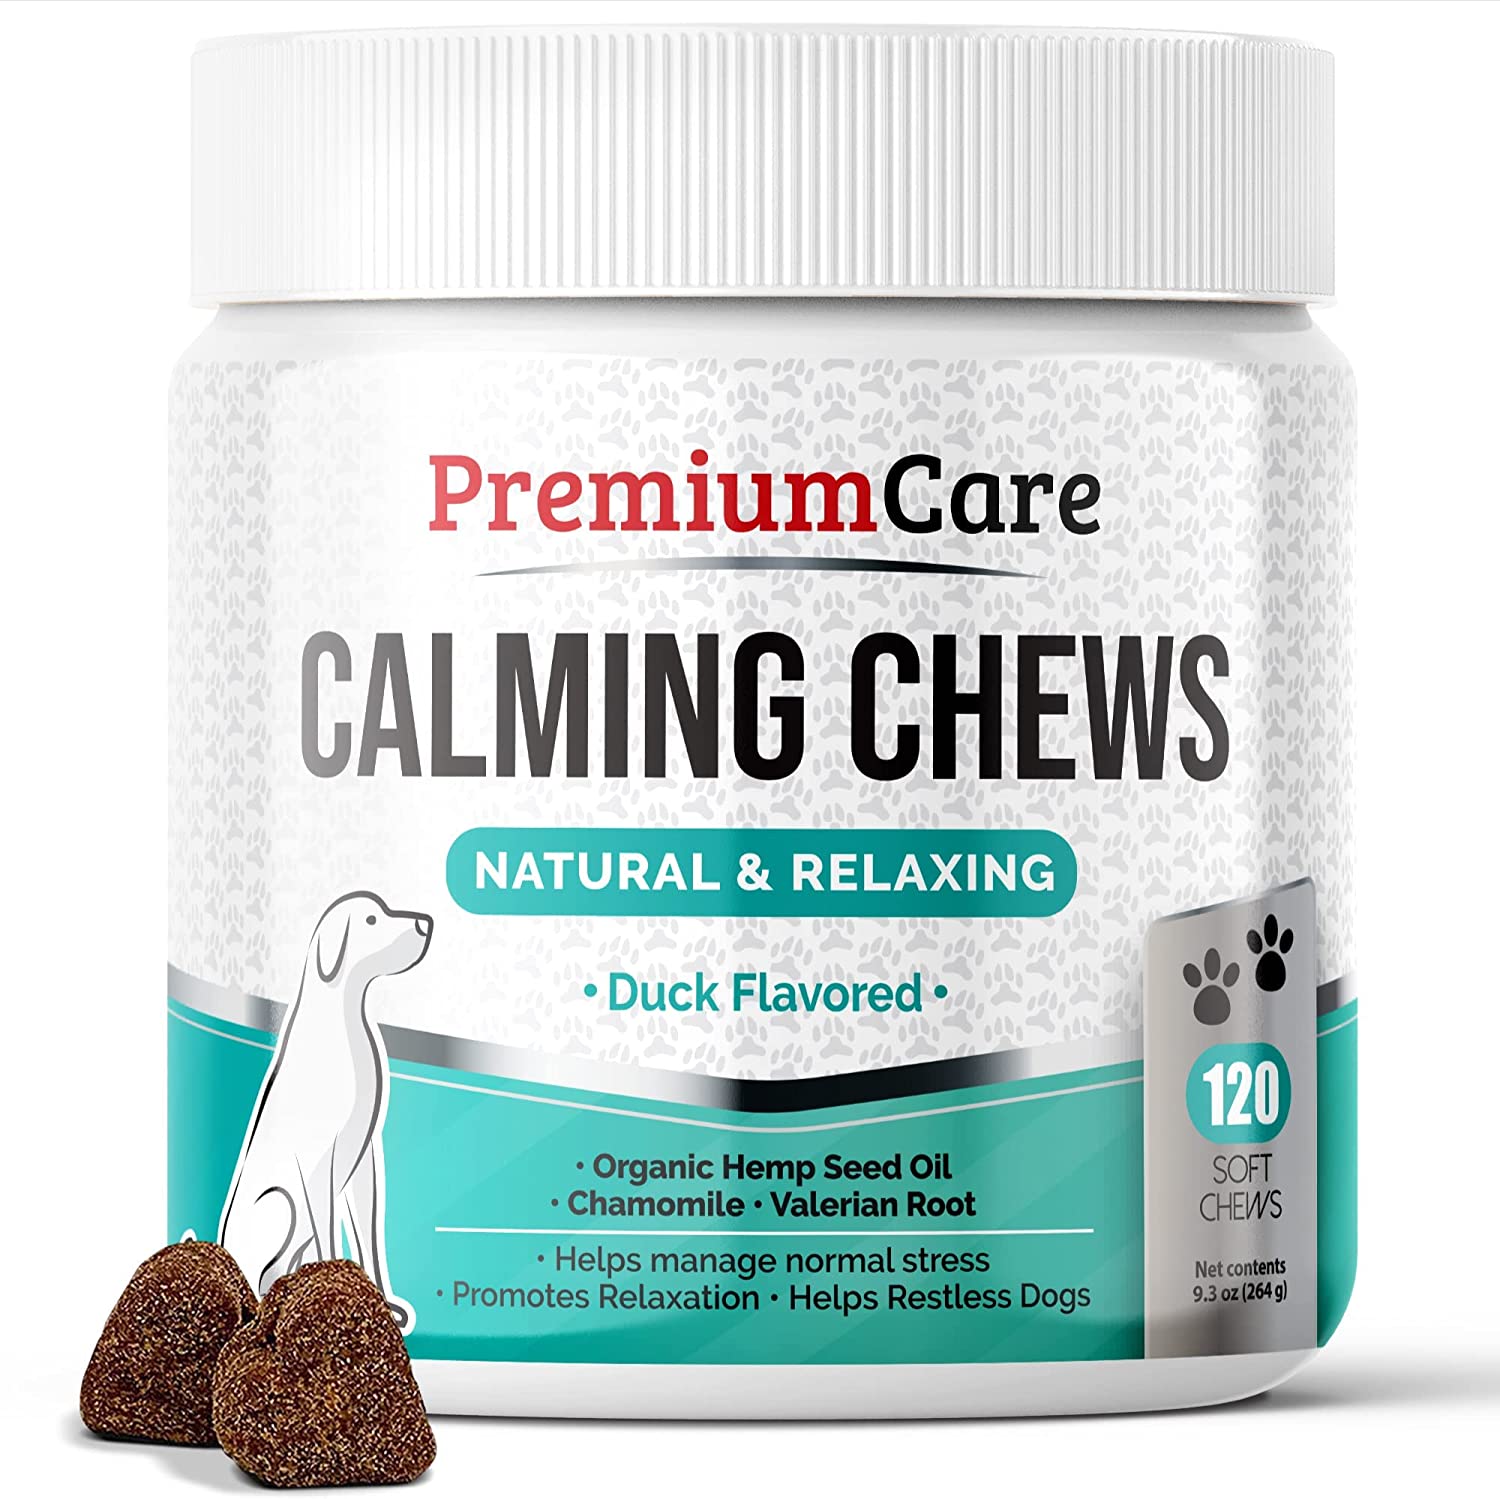 PREMIUM CARE Calming Chews for Dogs